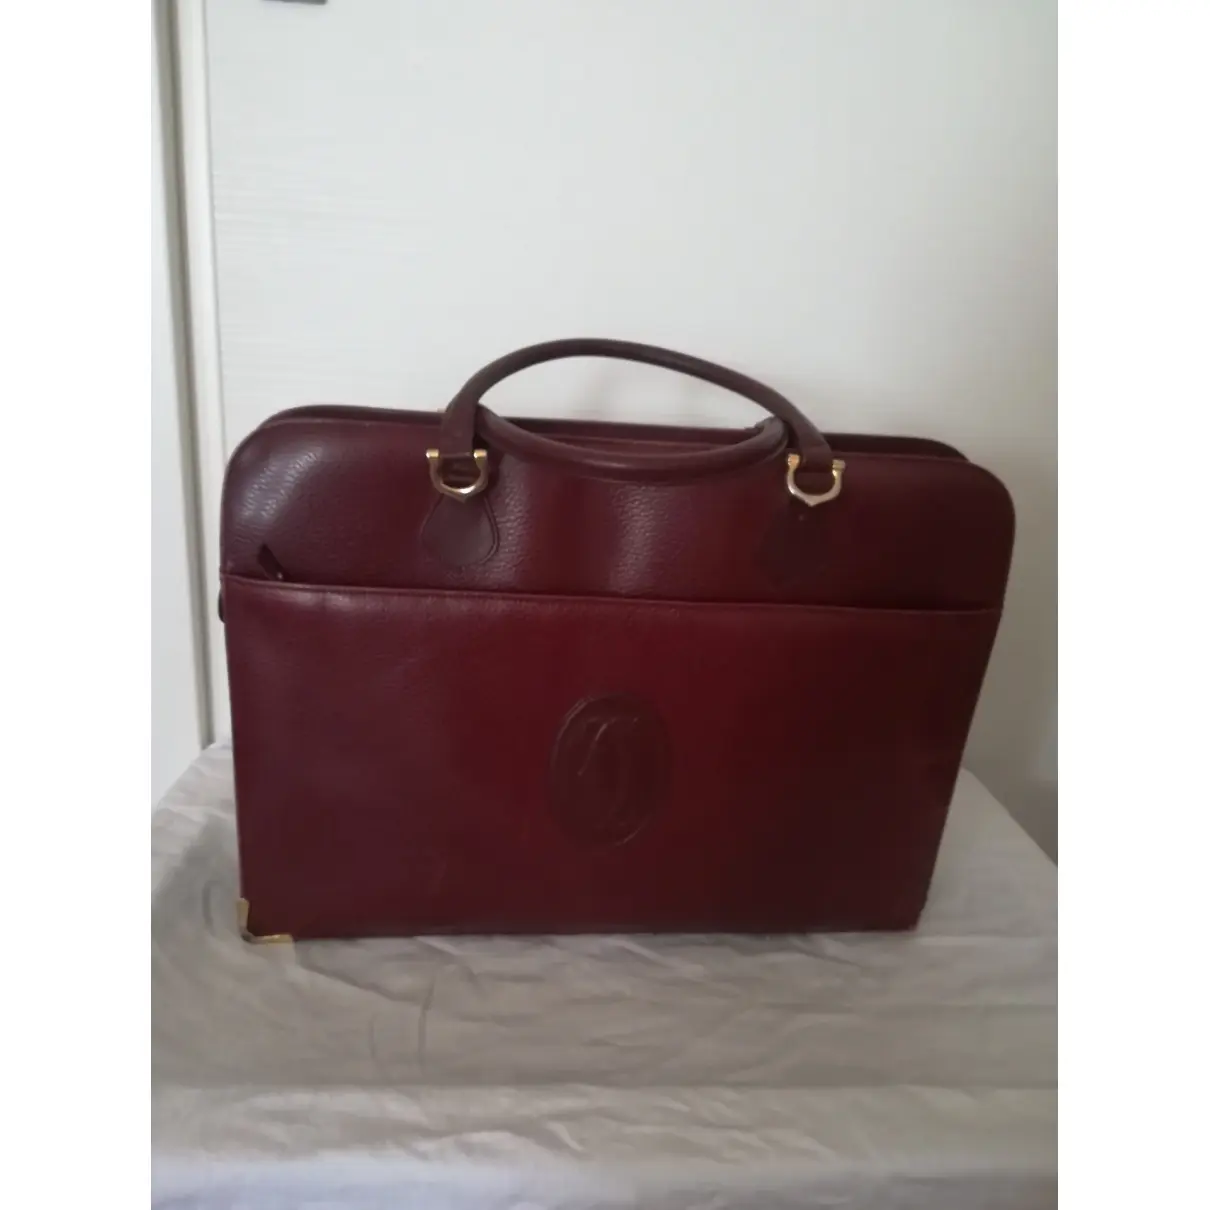 Buy Cartier Leather satchel online - Vintage